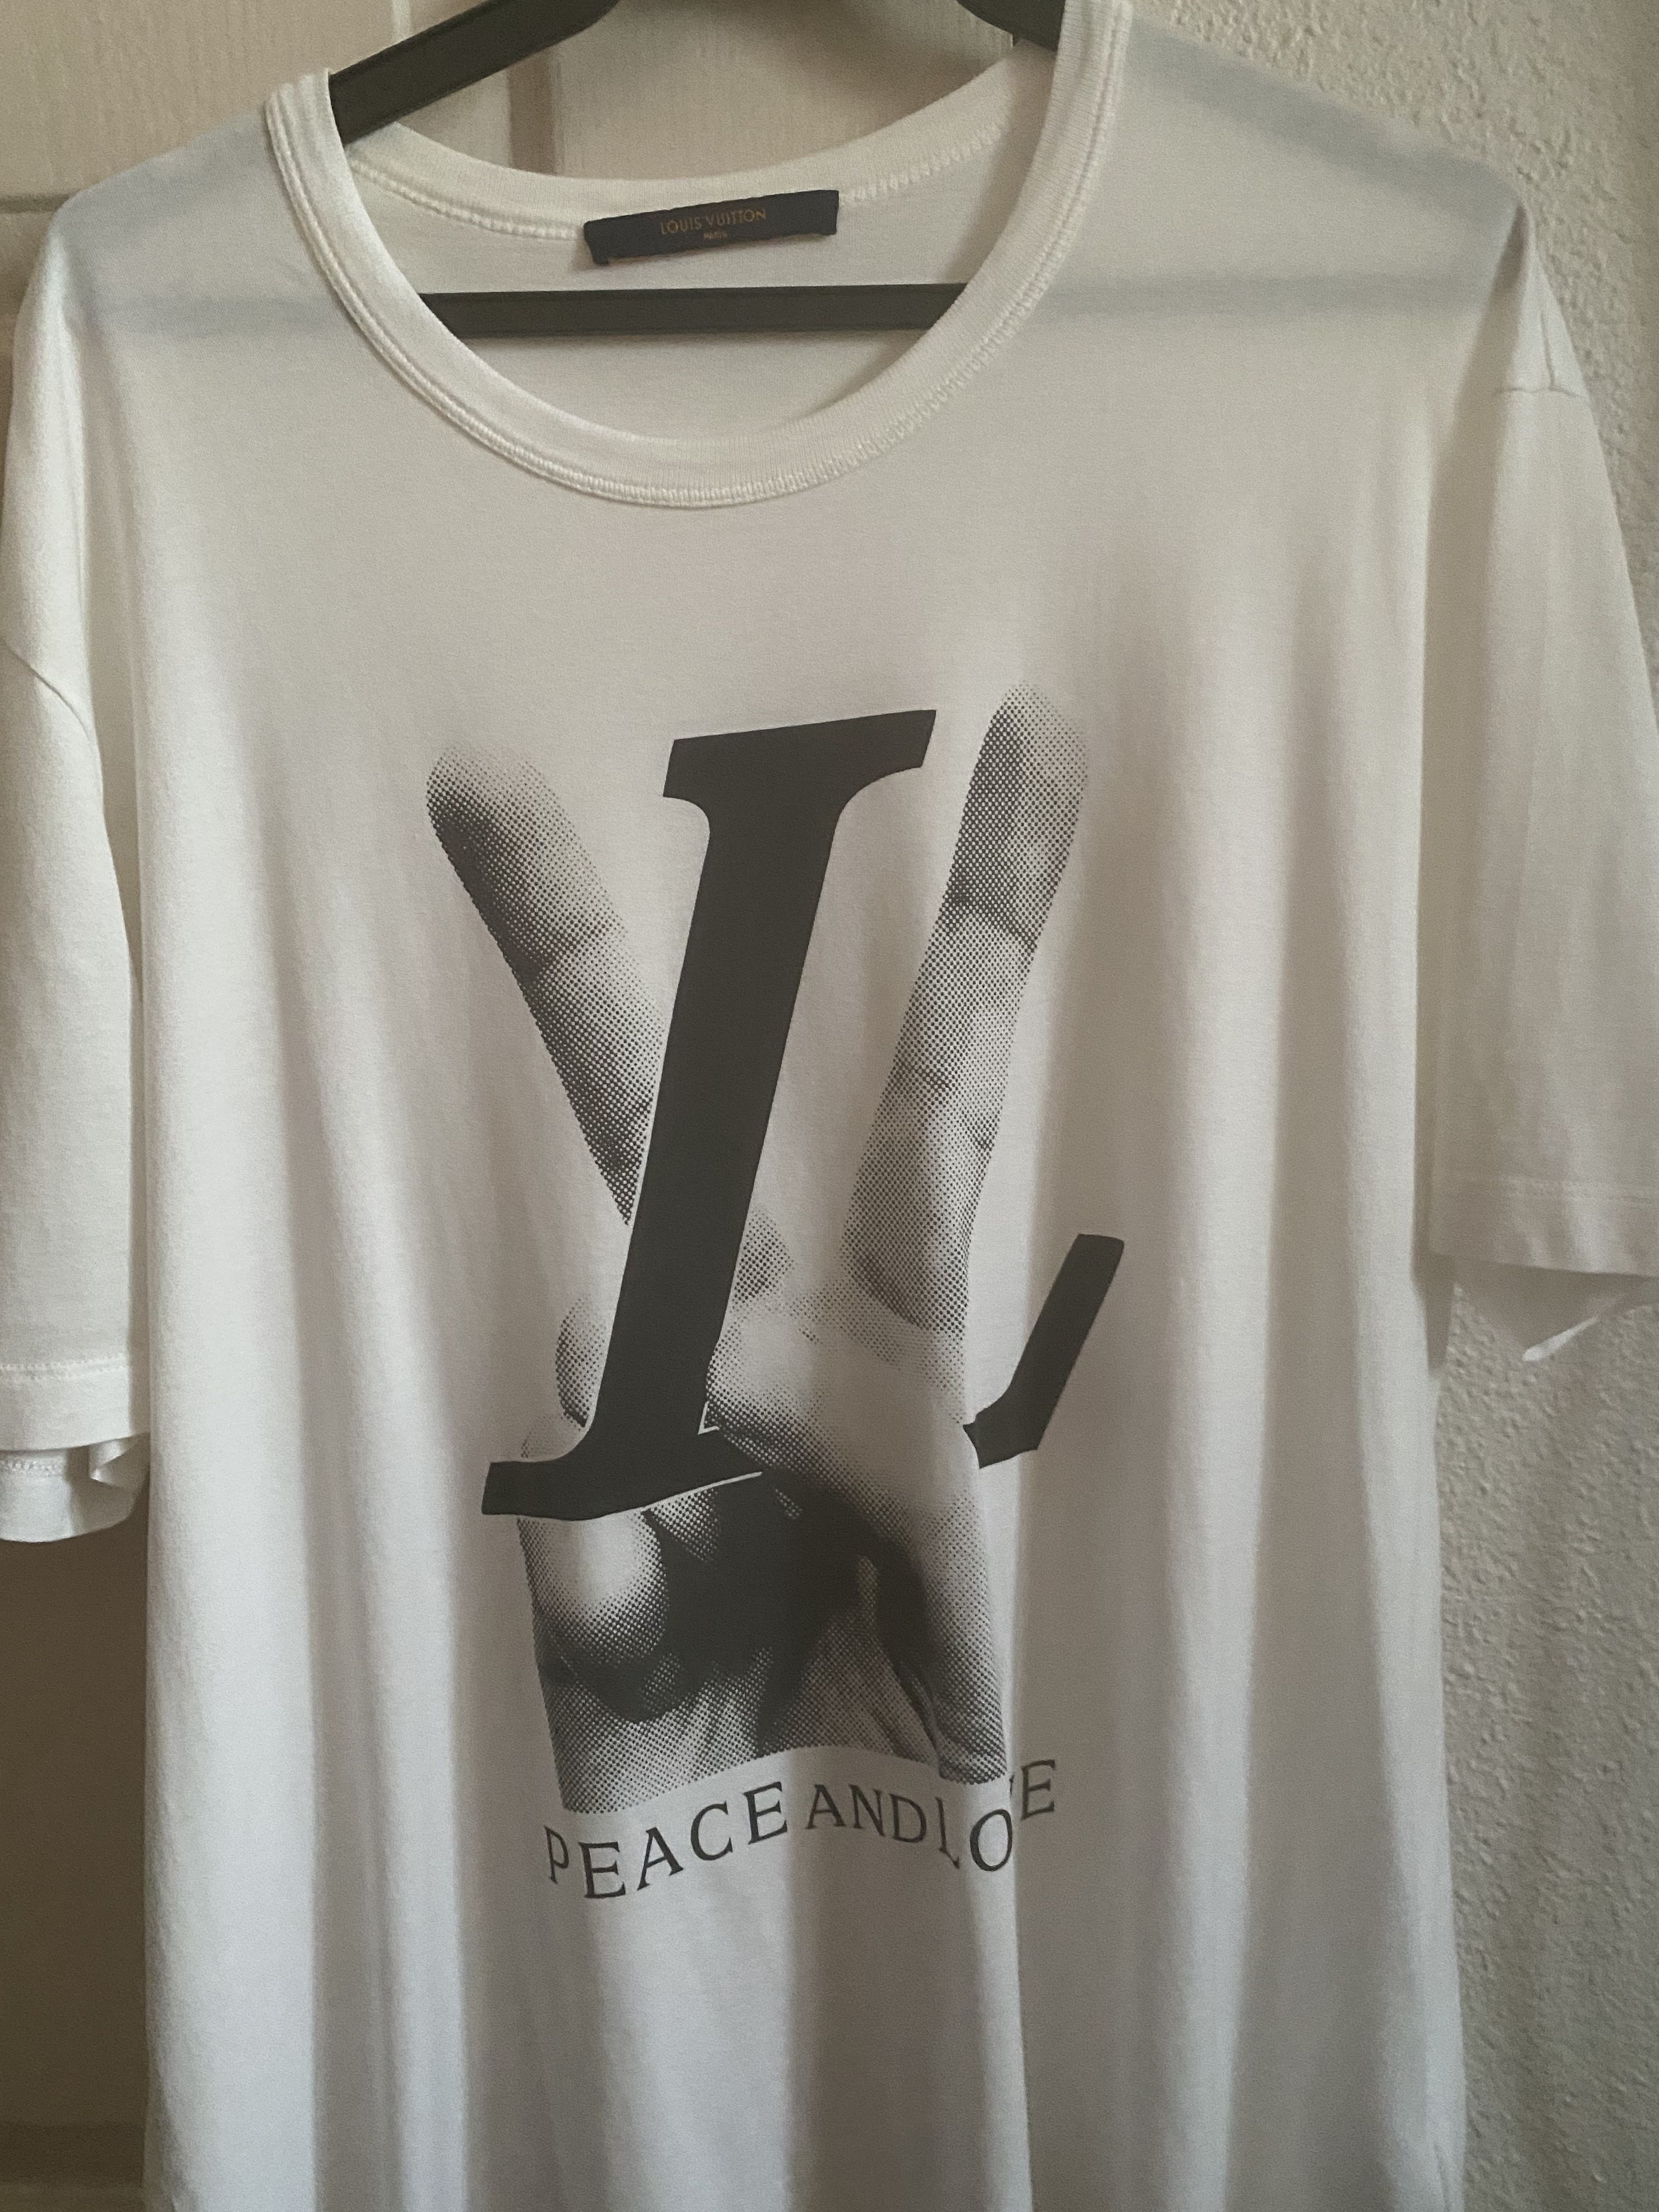 lv peace and love tee